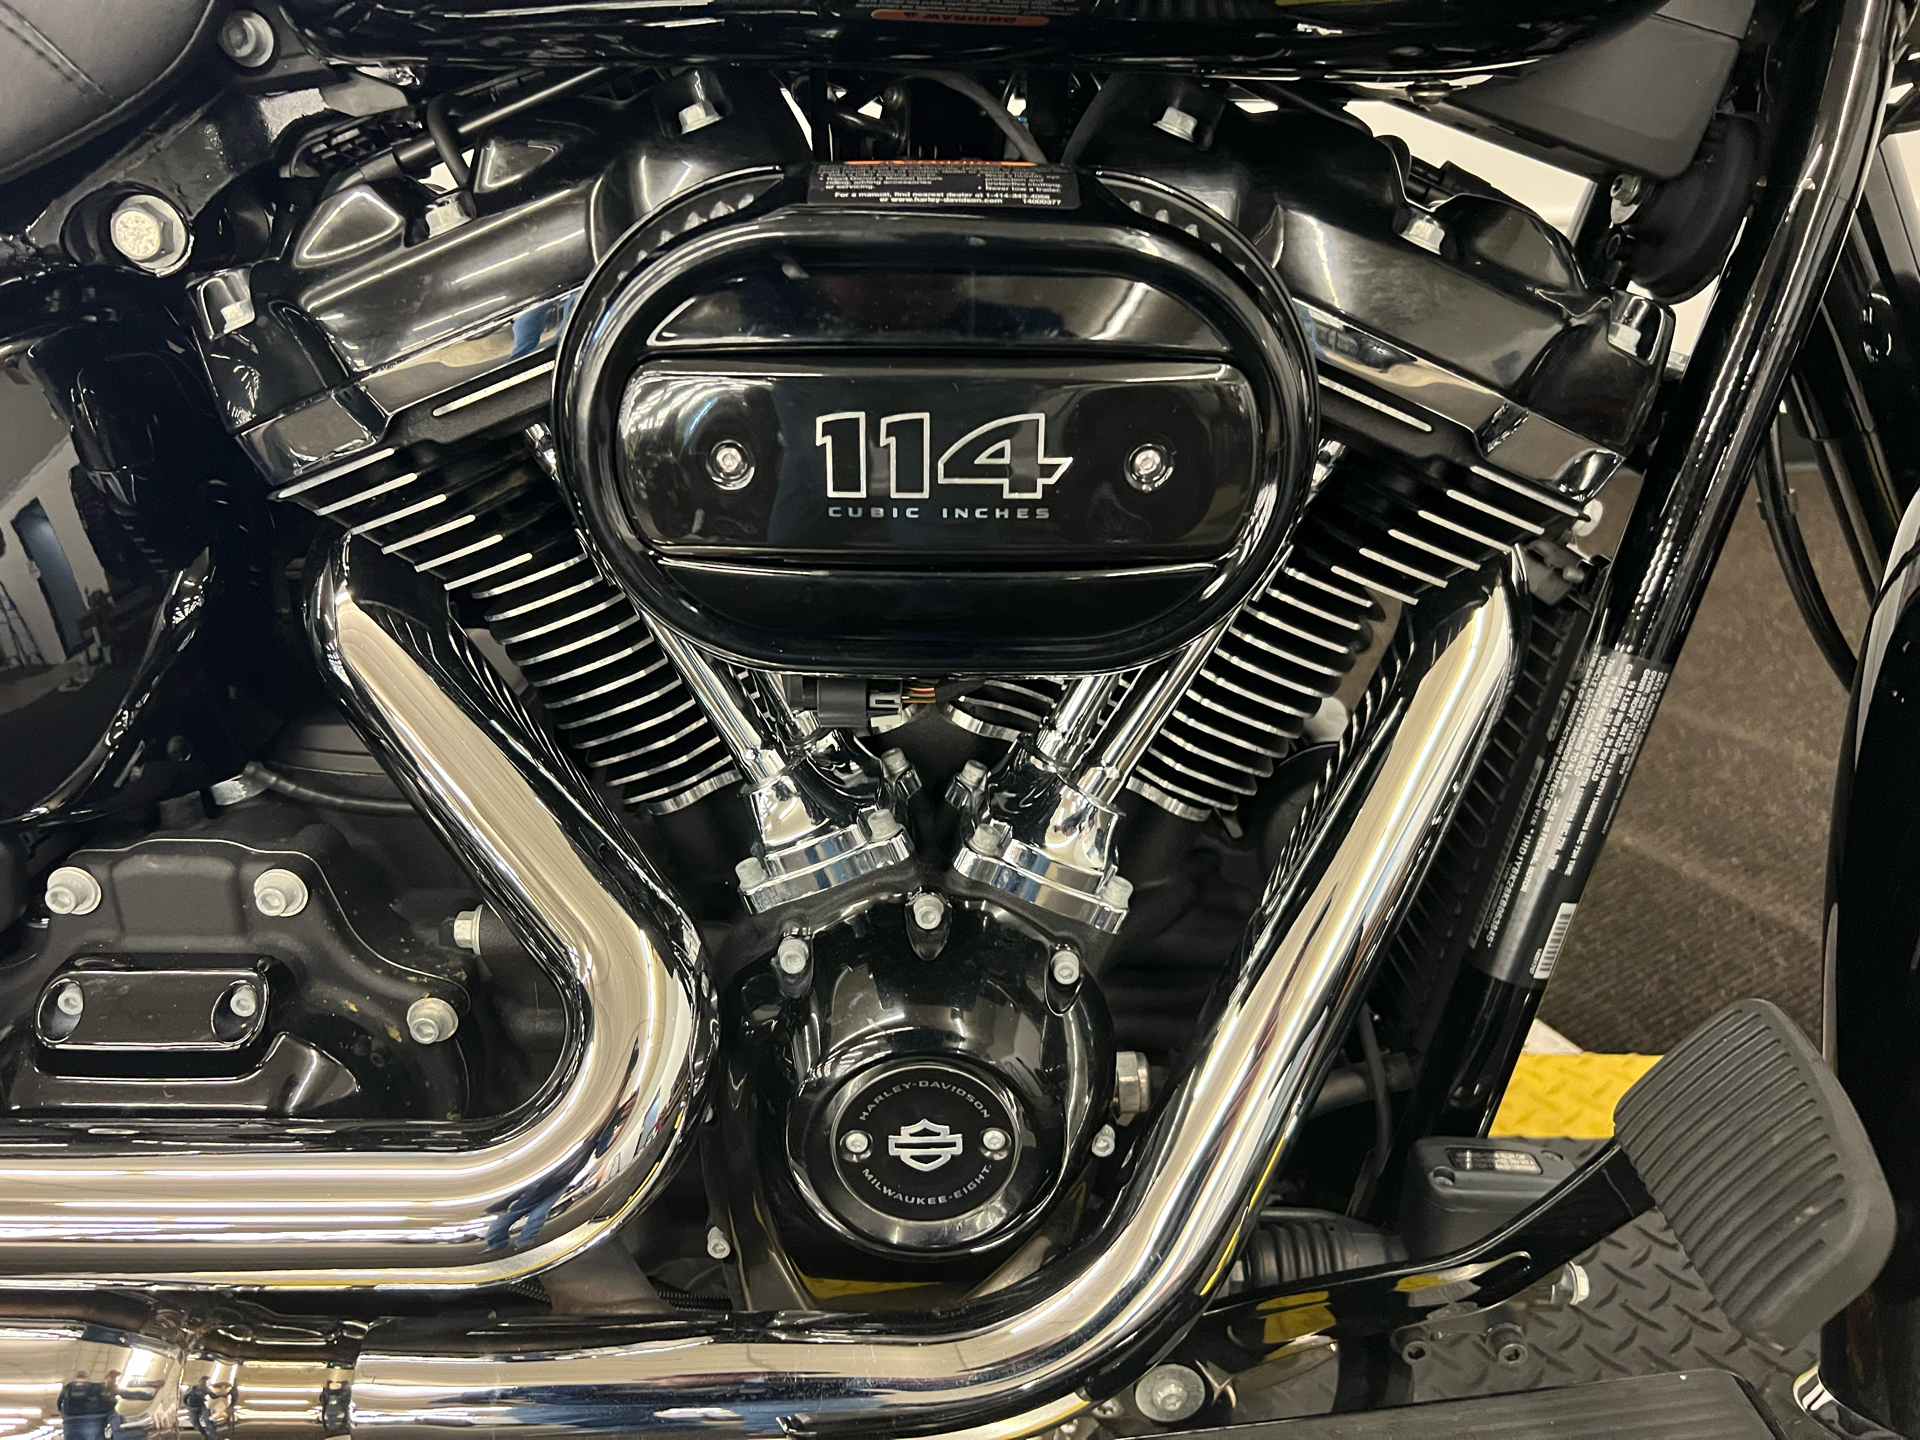 2019 Harley-Davidson Heritage Classic 114 in Tyrone, Pennsylvania - Photo 3